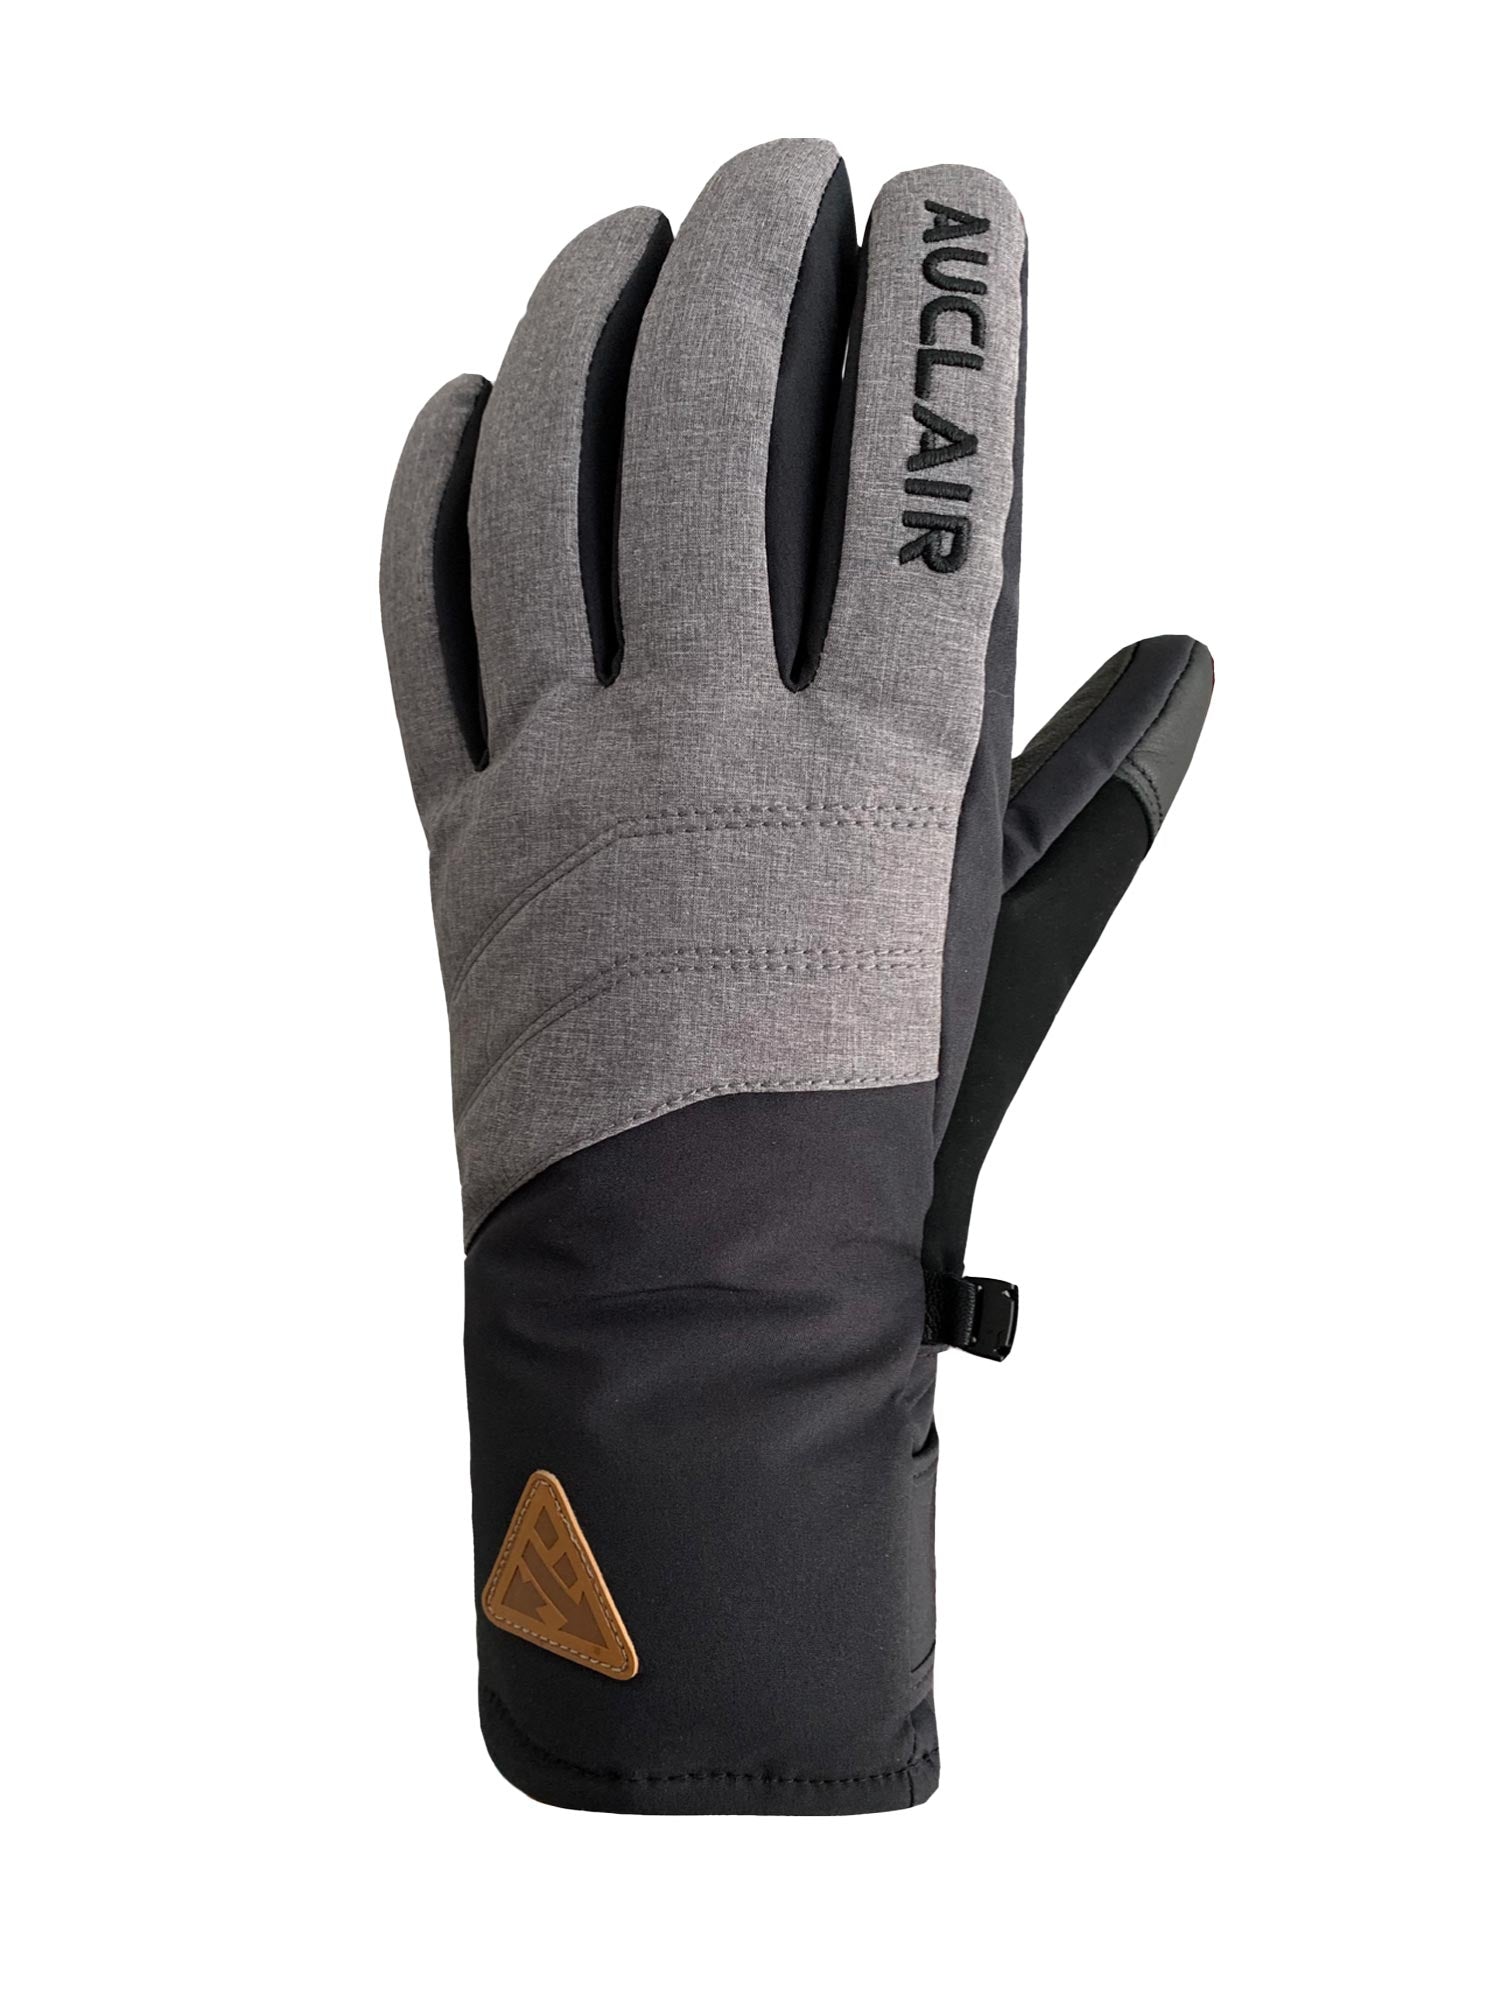 men's Auclair Avalanche ski glove, gray & black